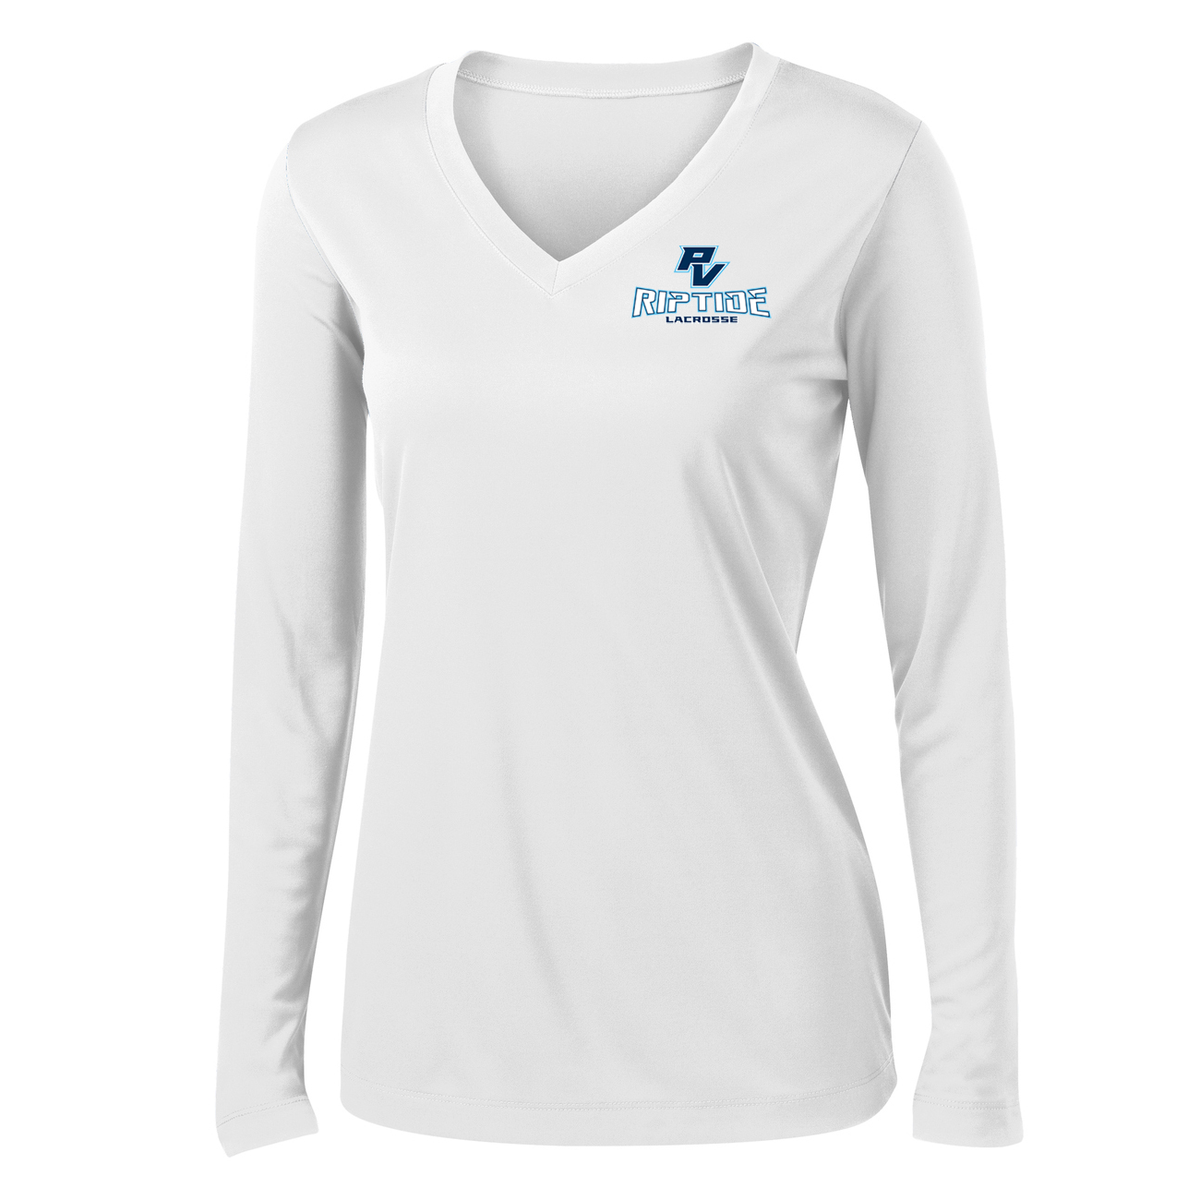 Ponte Vedra Riptide Lacrosse Women's Long Sleeve Performance Shirt